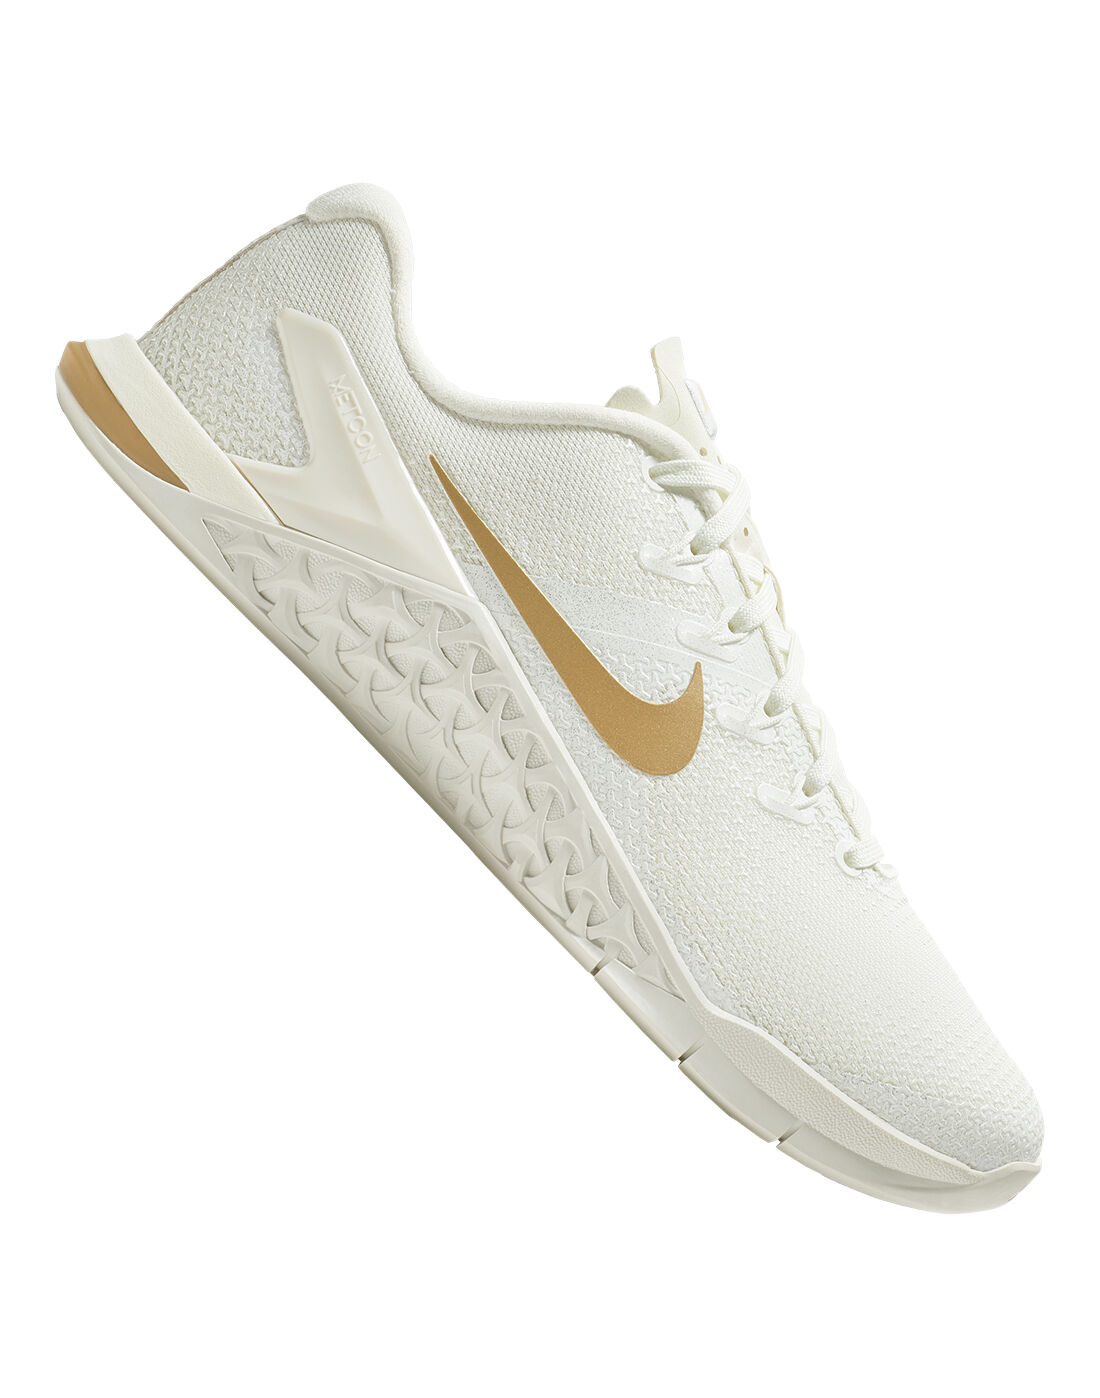 White \u0026 Gold Nike Metcon Gym Shoes 